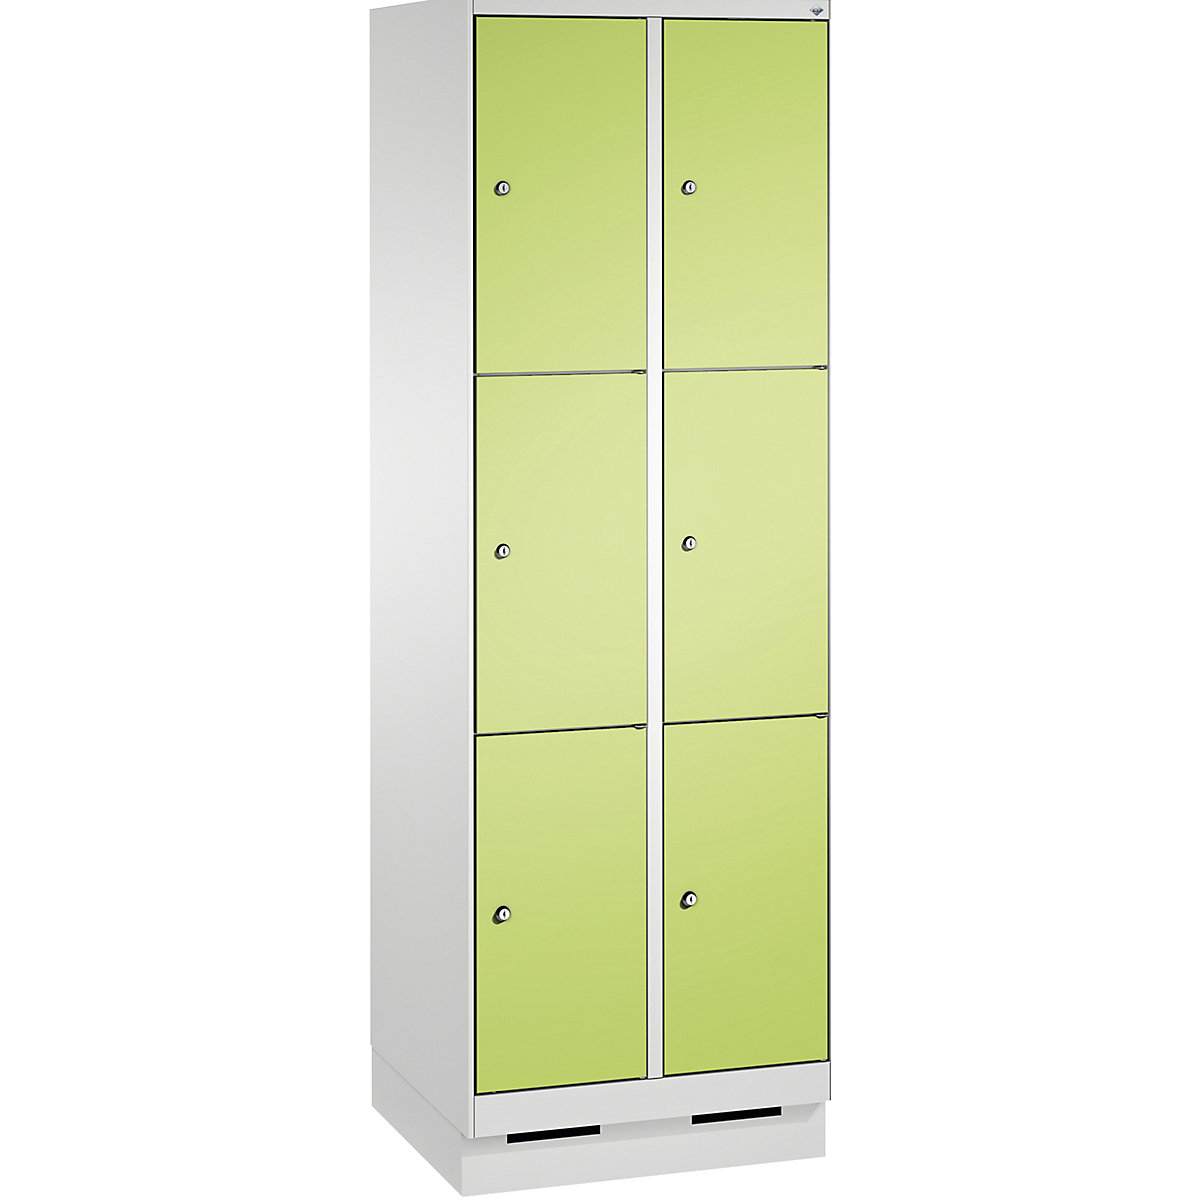 EVOLO locker unit, with plinth – C+P, 2 compartments, 3 shelf compartments each, compartment width 300 mm, light grey / viridian green-12